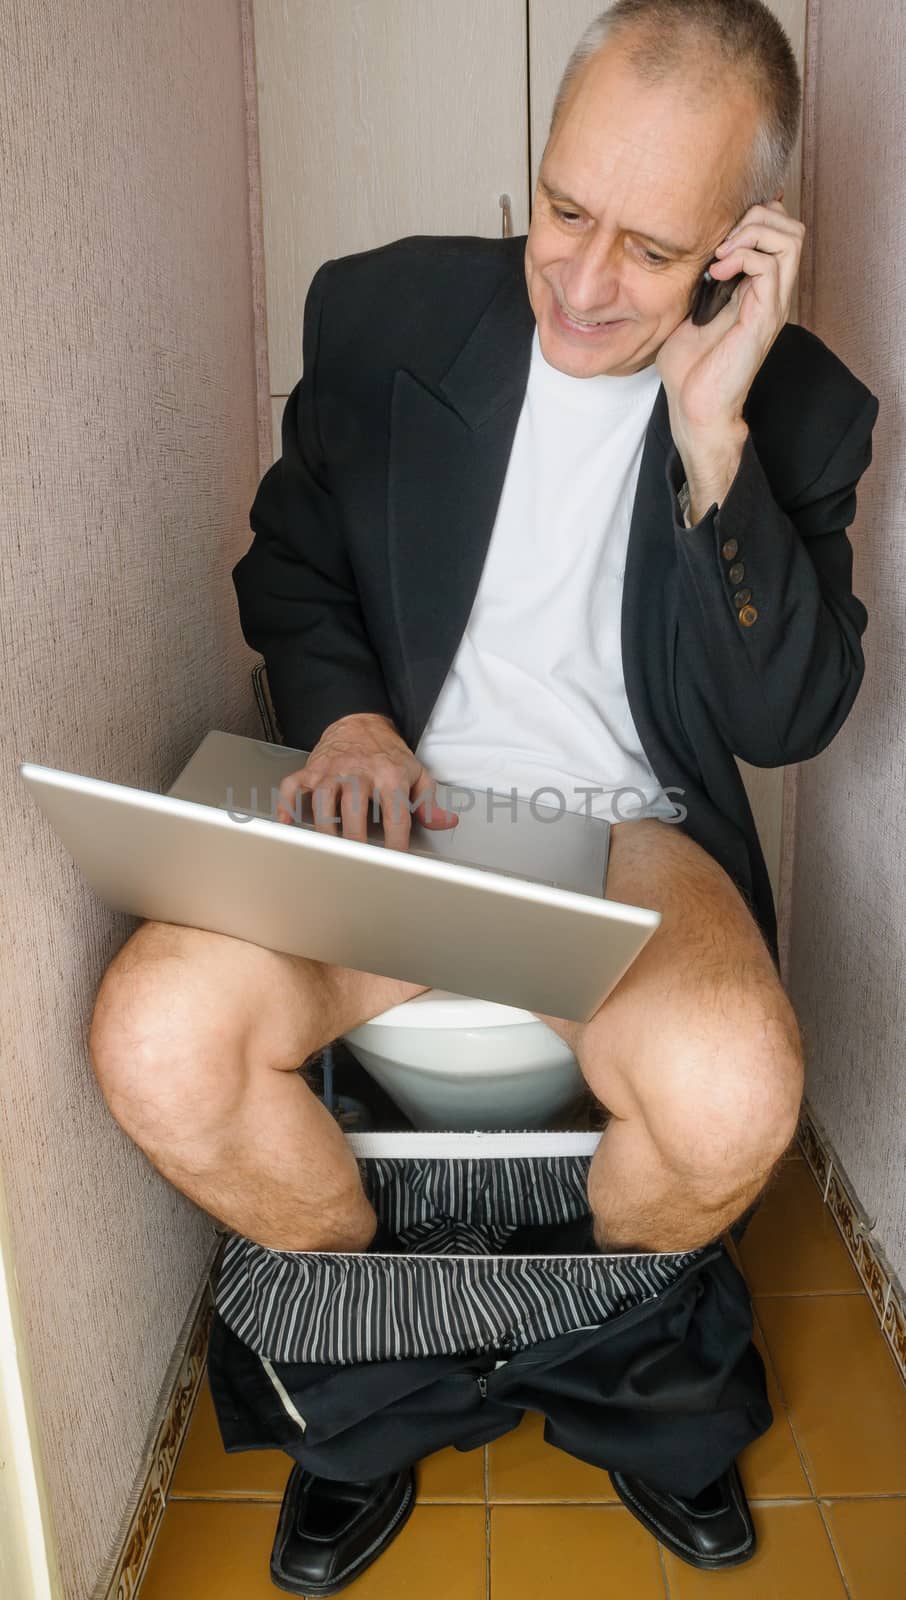 Workaholic Adult Businessman in Toilet by MaxalTamor